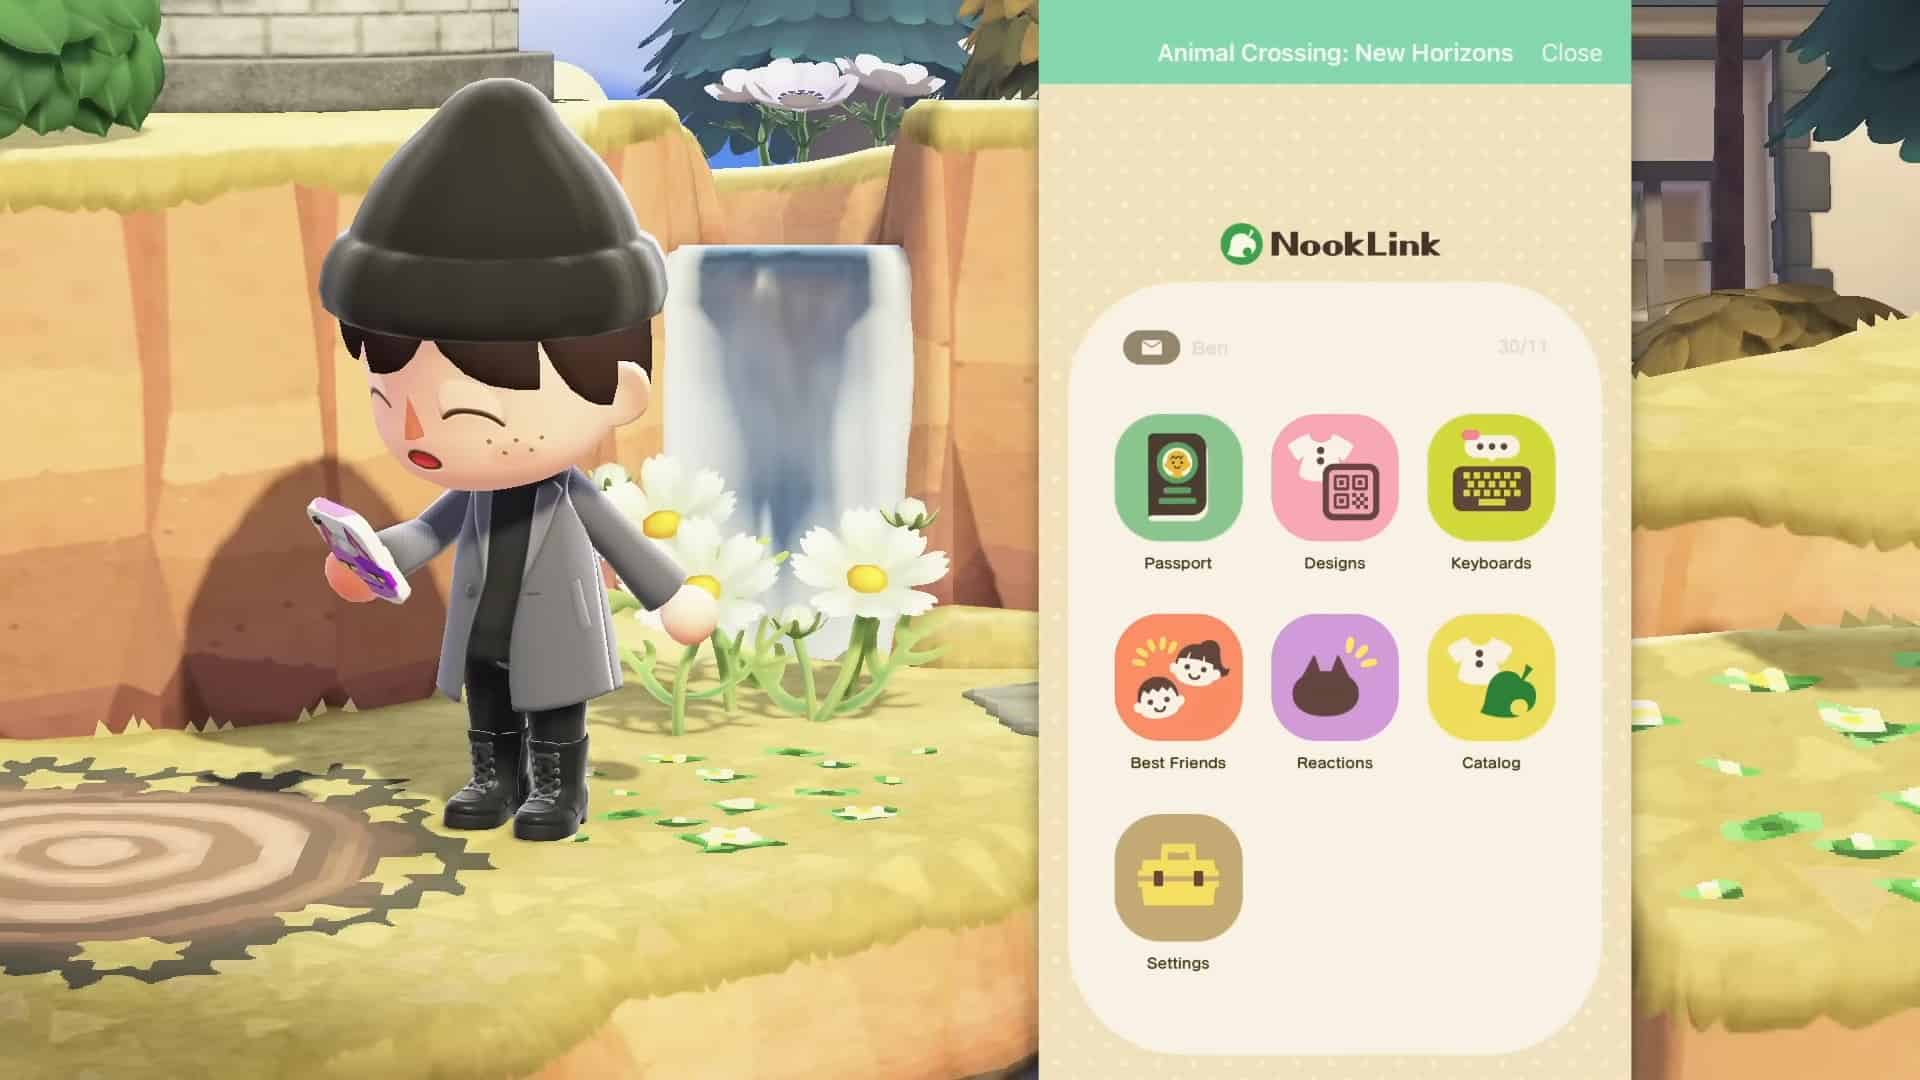 Nooklink app in Animal Crossing New Horizons